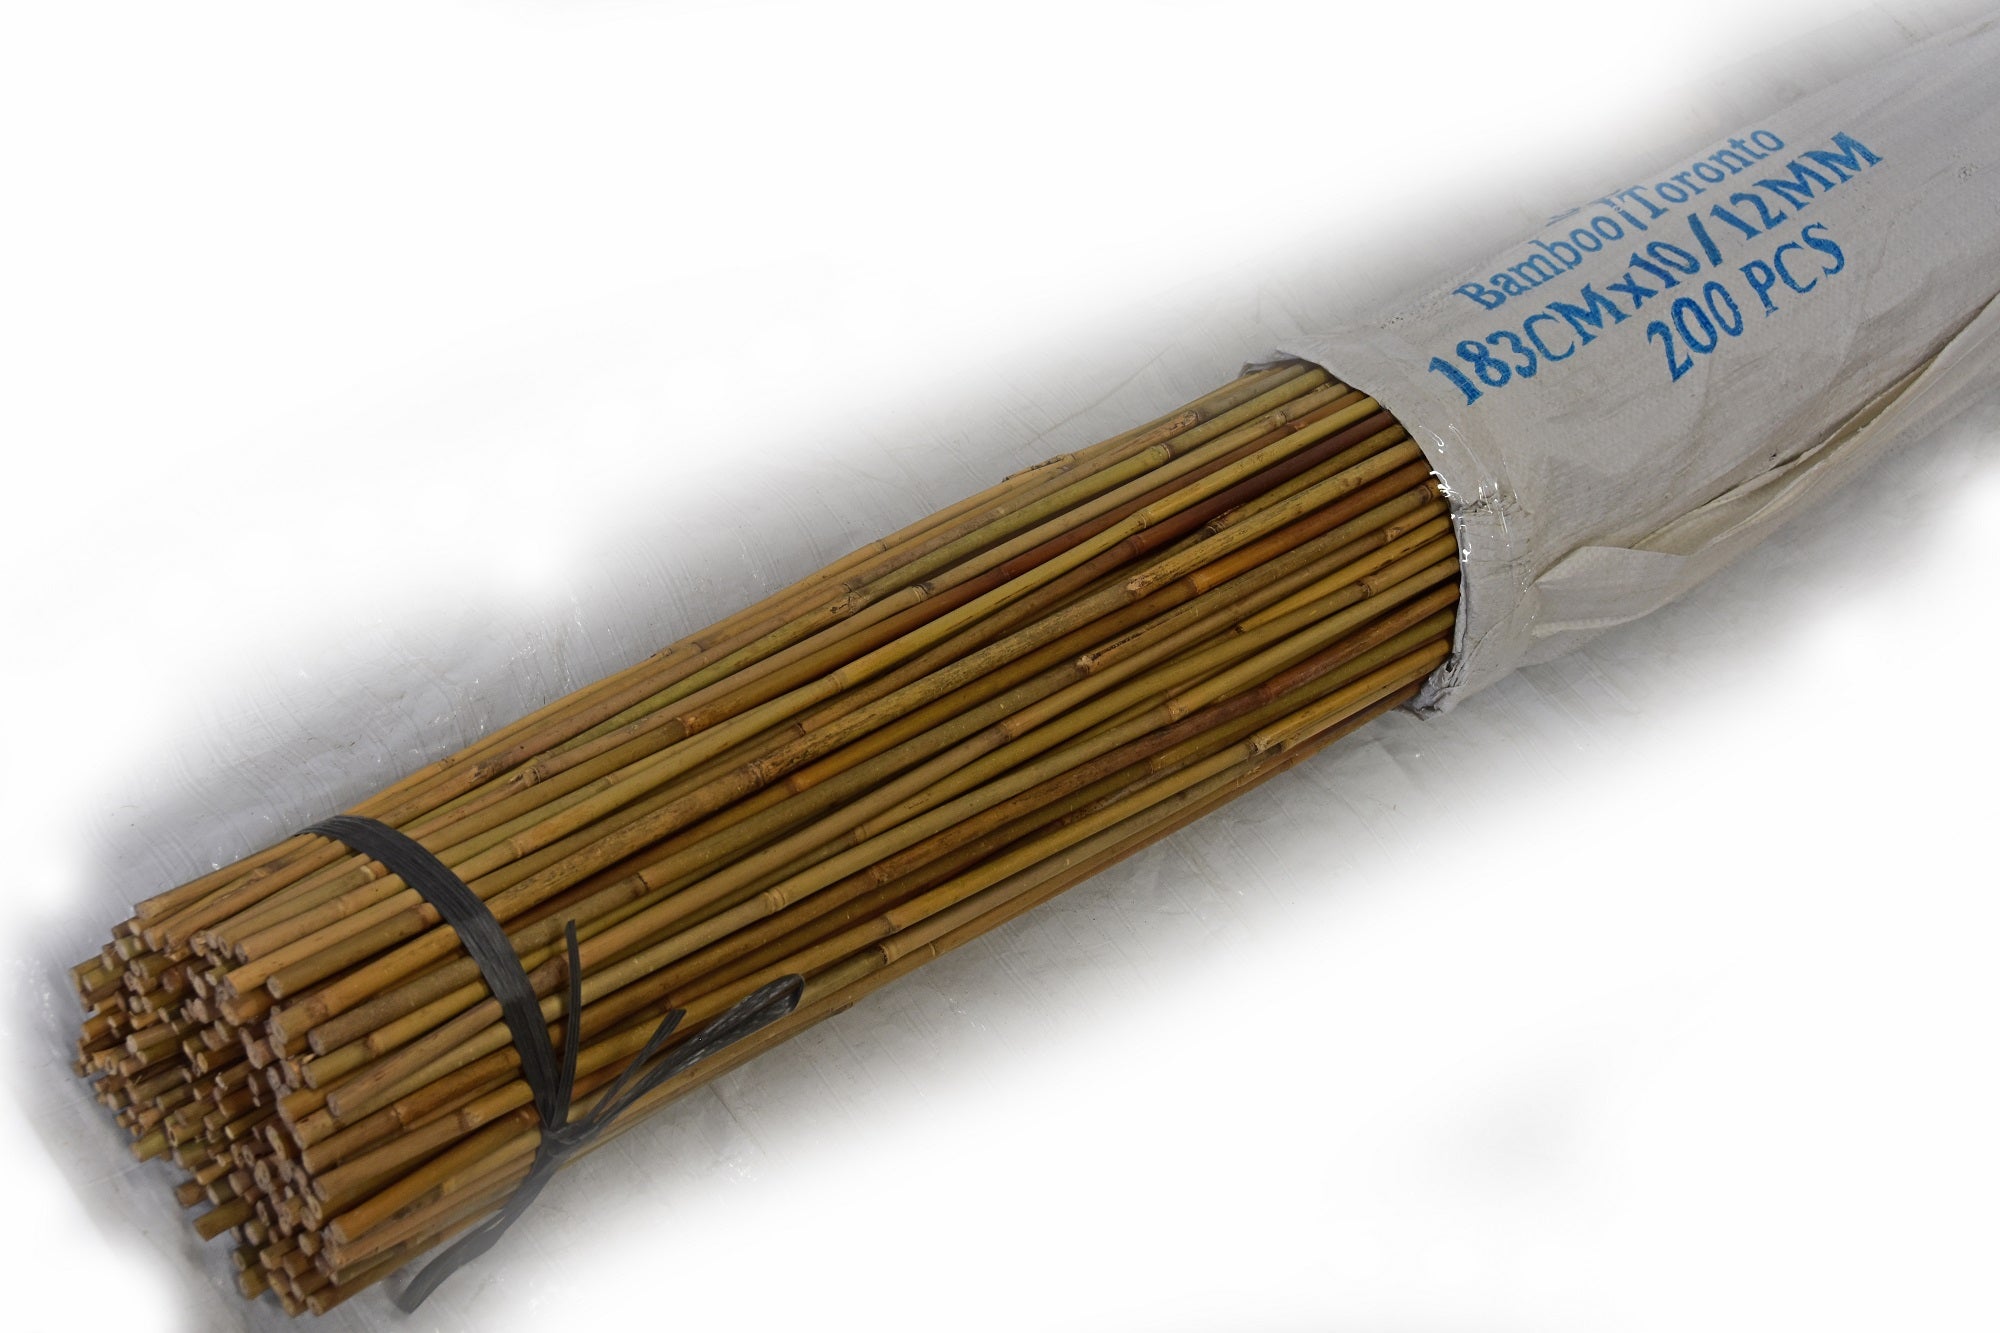 Tonkin Bamboo Pole 10-12mm x 6' Bundle of 200 - Bamboo Toronto Store